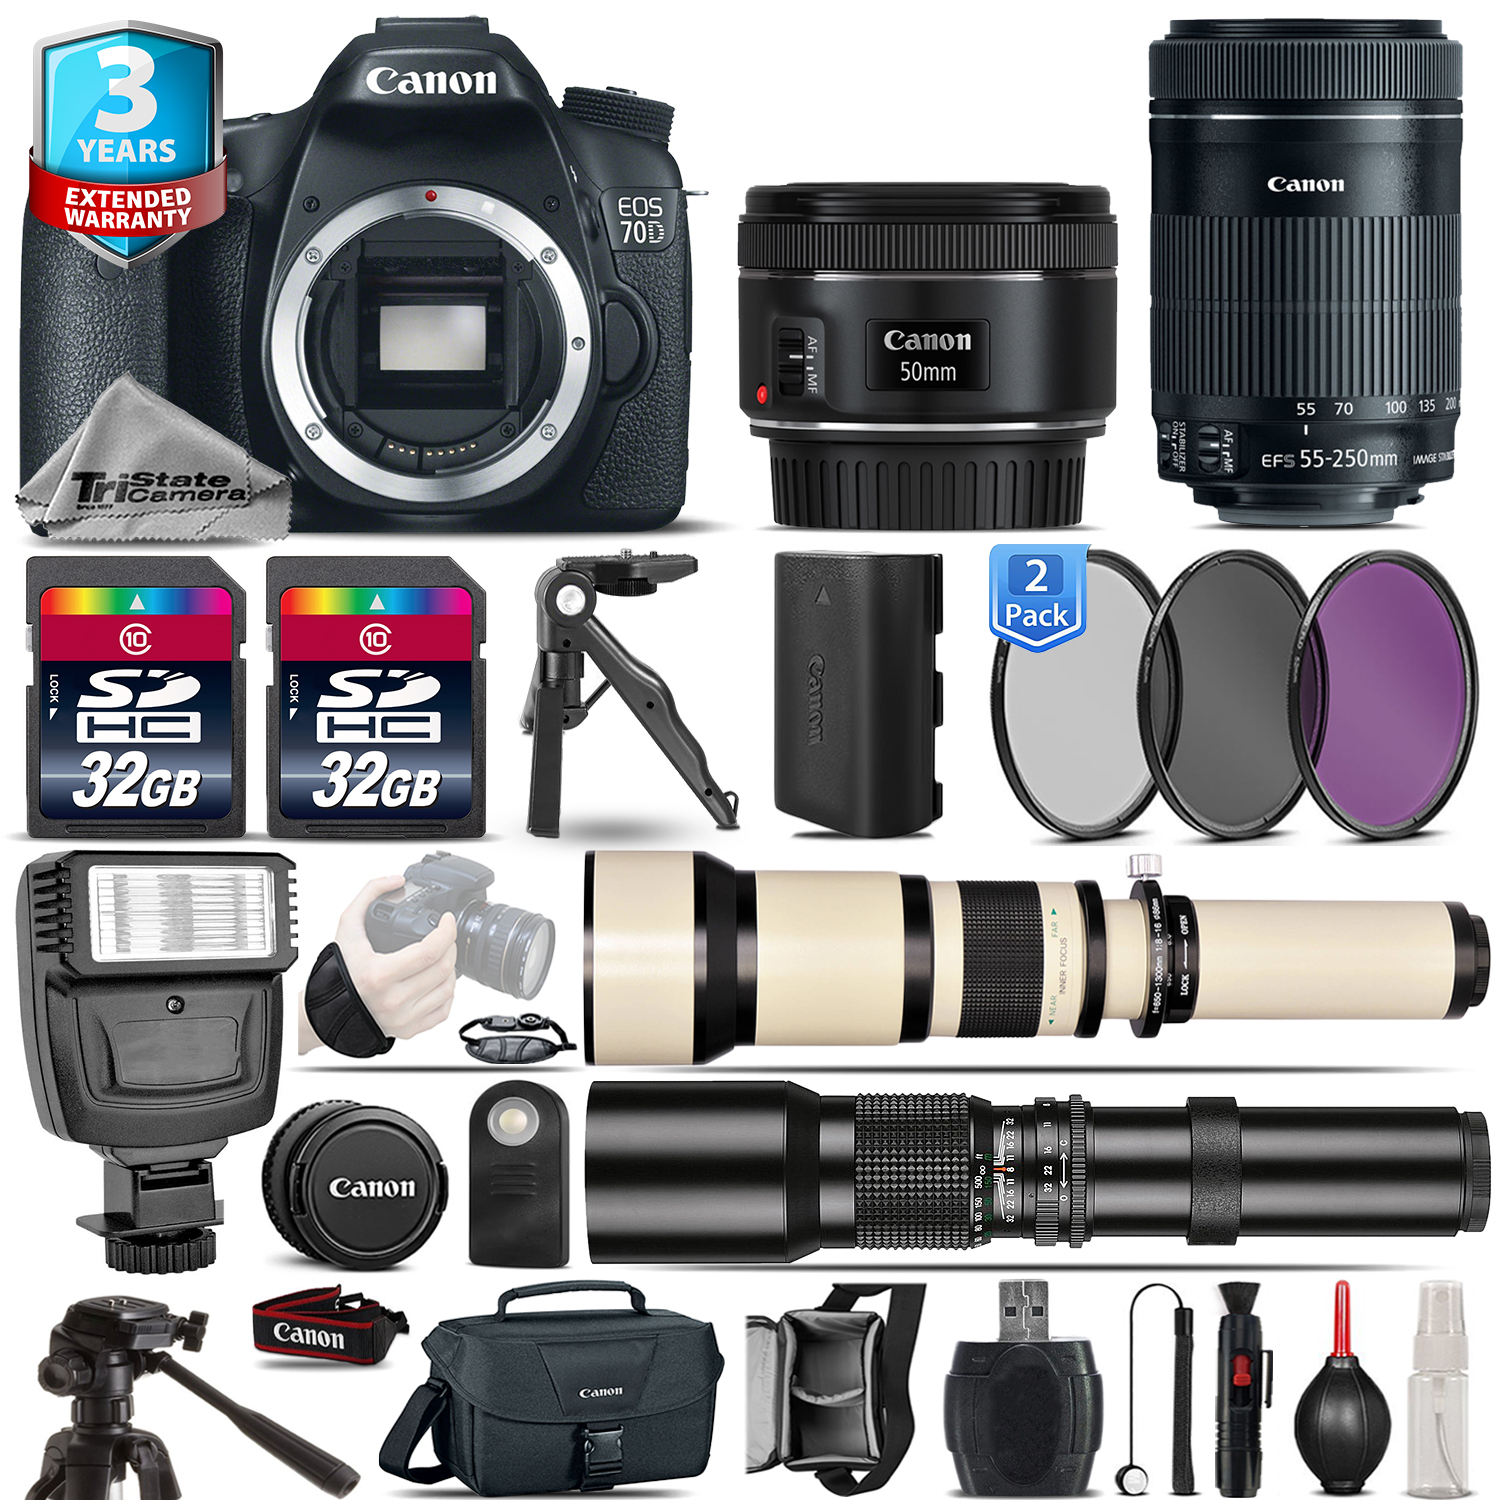 EOS 70D DSLR Camera + 50mm 1.8 + 55-250mm IS STM + 3yr Warranty -64GB Kit *FREE SHIPPING*